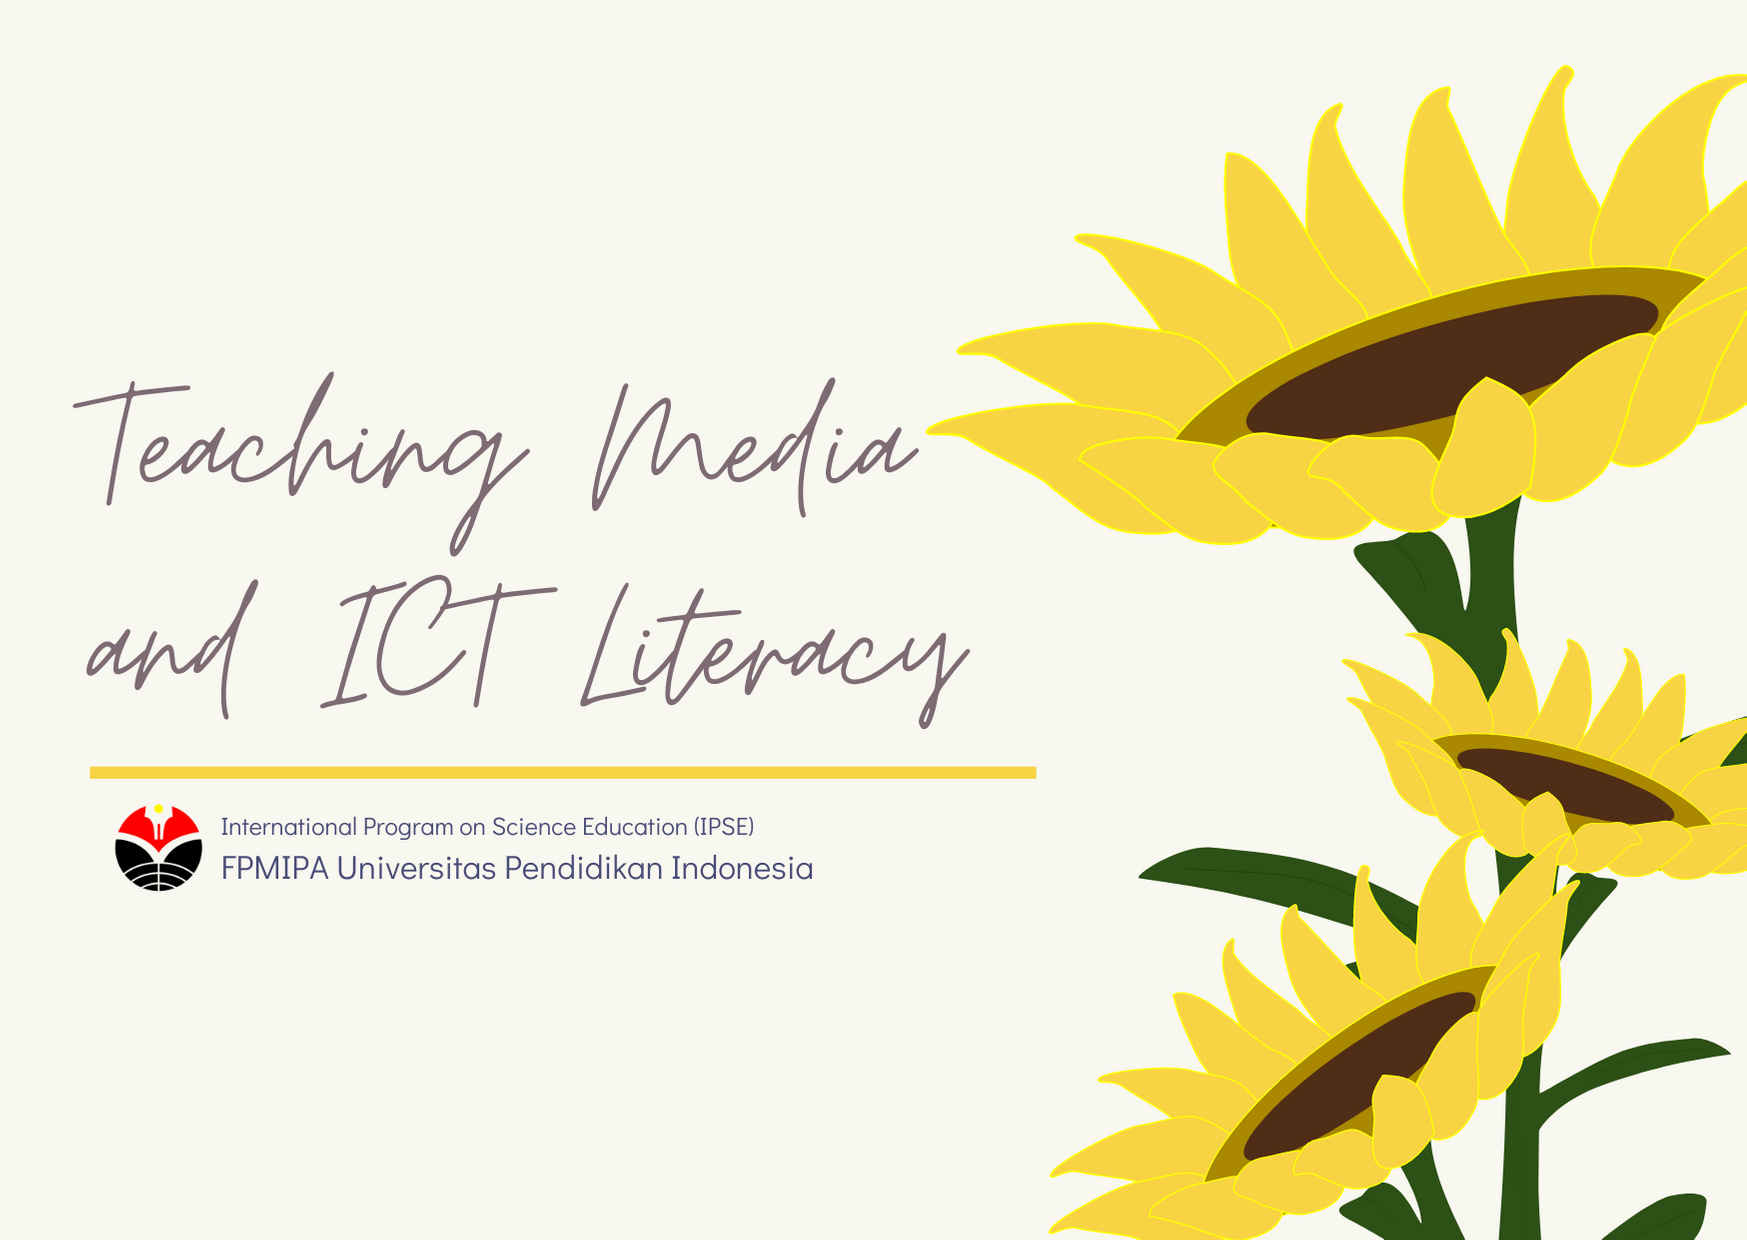 2021-Sem3-Teaching Media and ICT Literacy-A